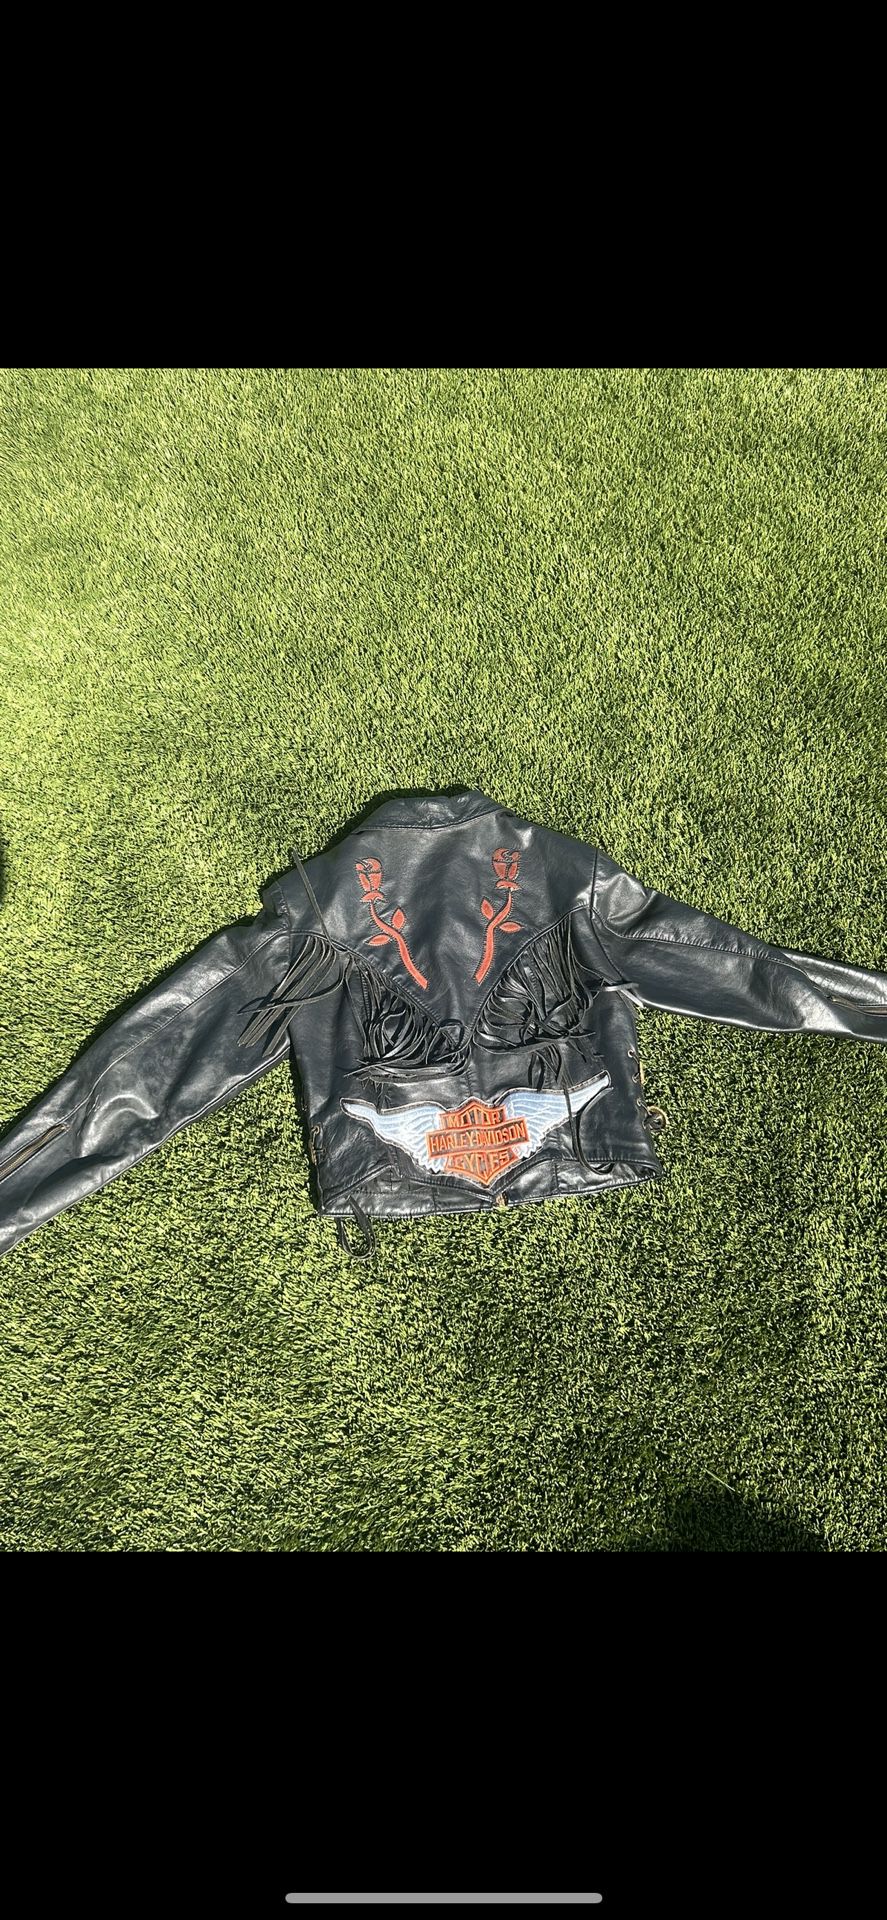 Harley Davidson Leather Jacket 